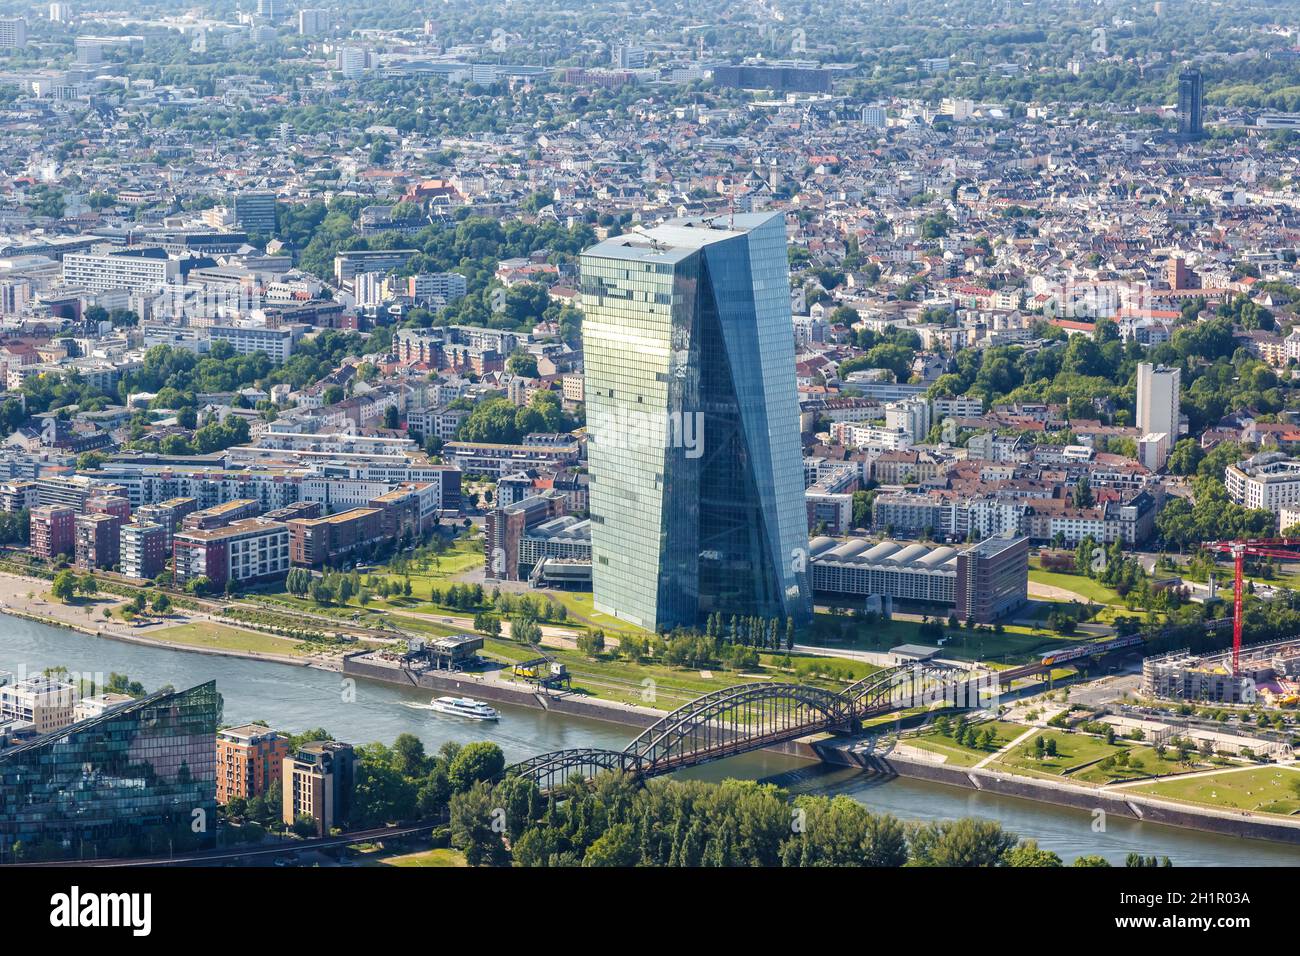 Frankfurt, Germany - May 27, 2020: ECB European Central Bank skyscraper skyline aerial photo Main river city in Germany. Stock Photo